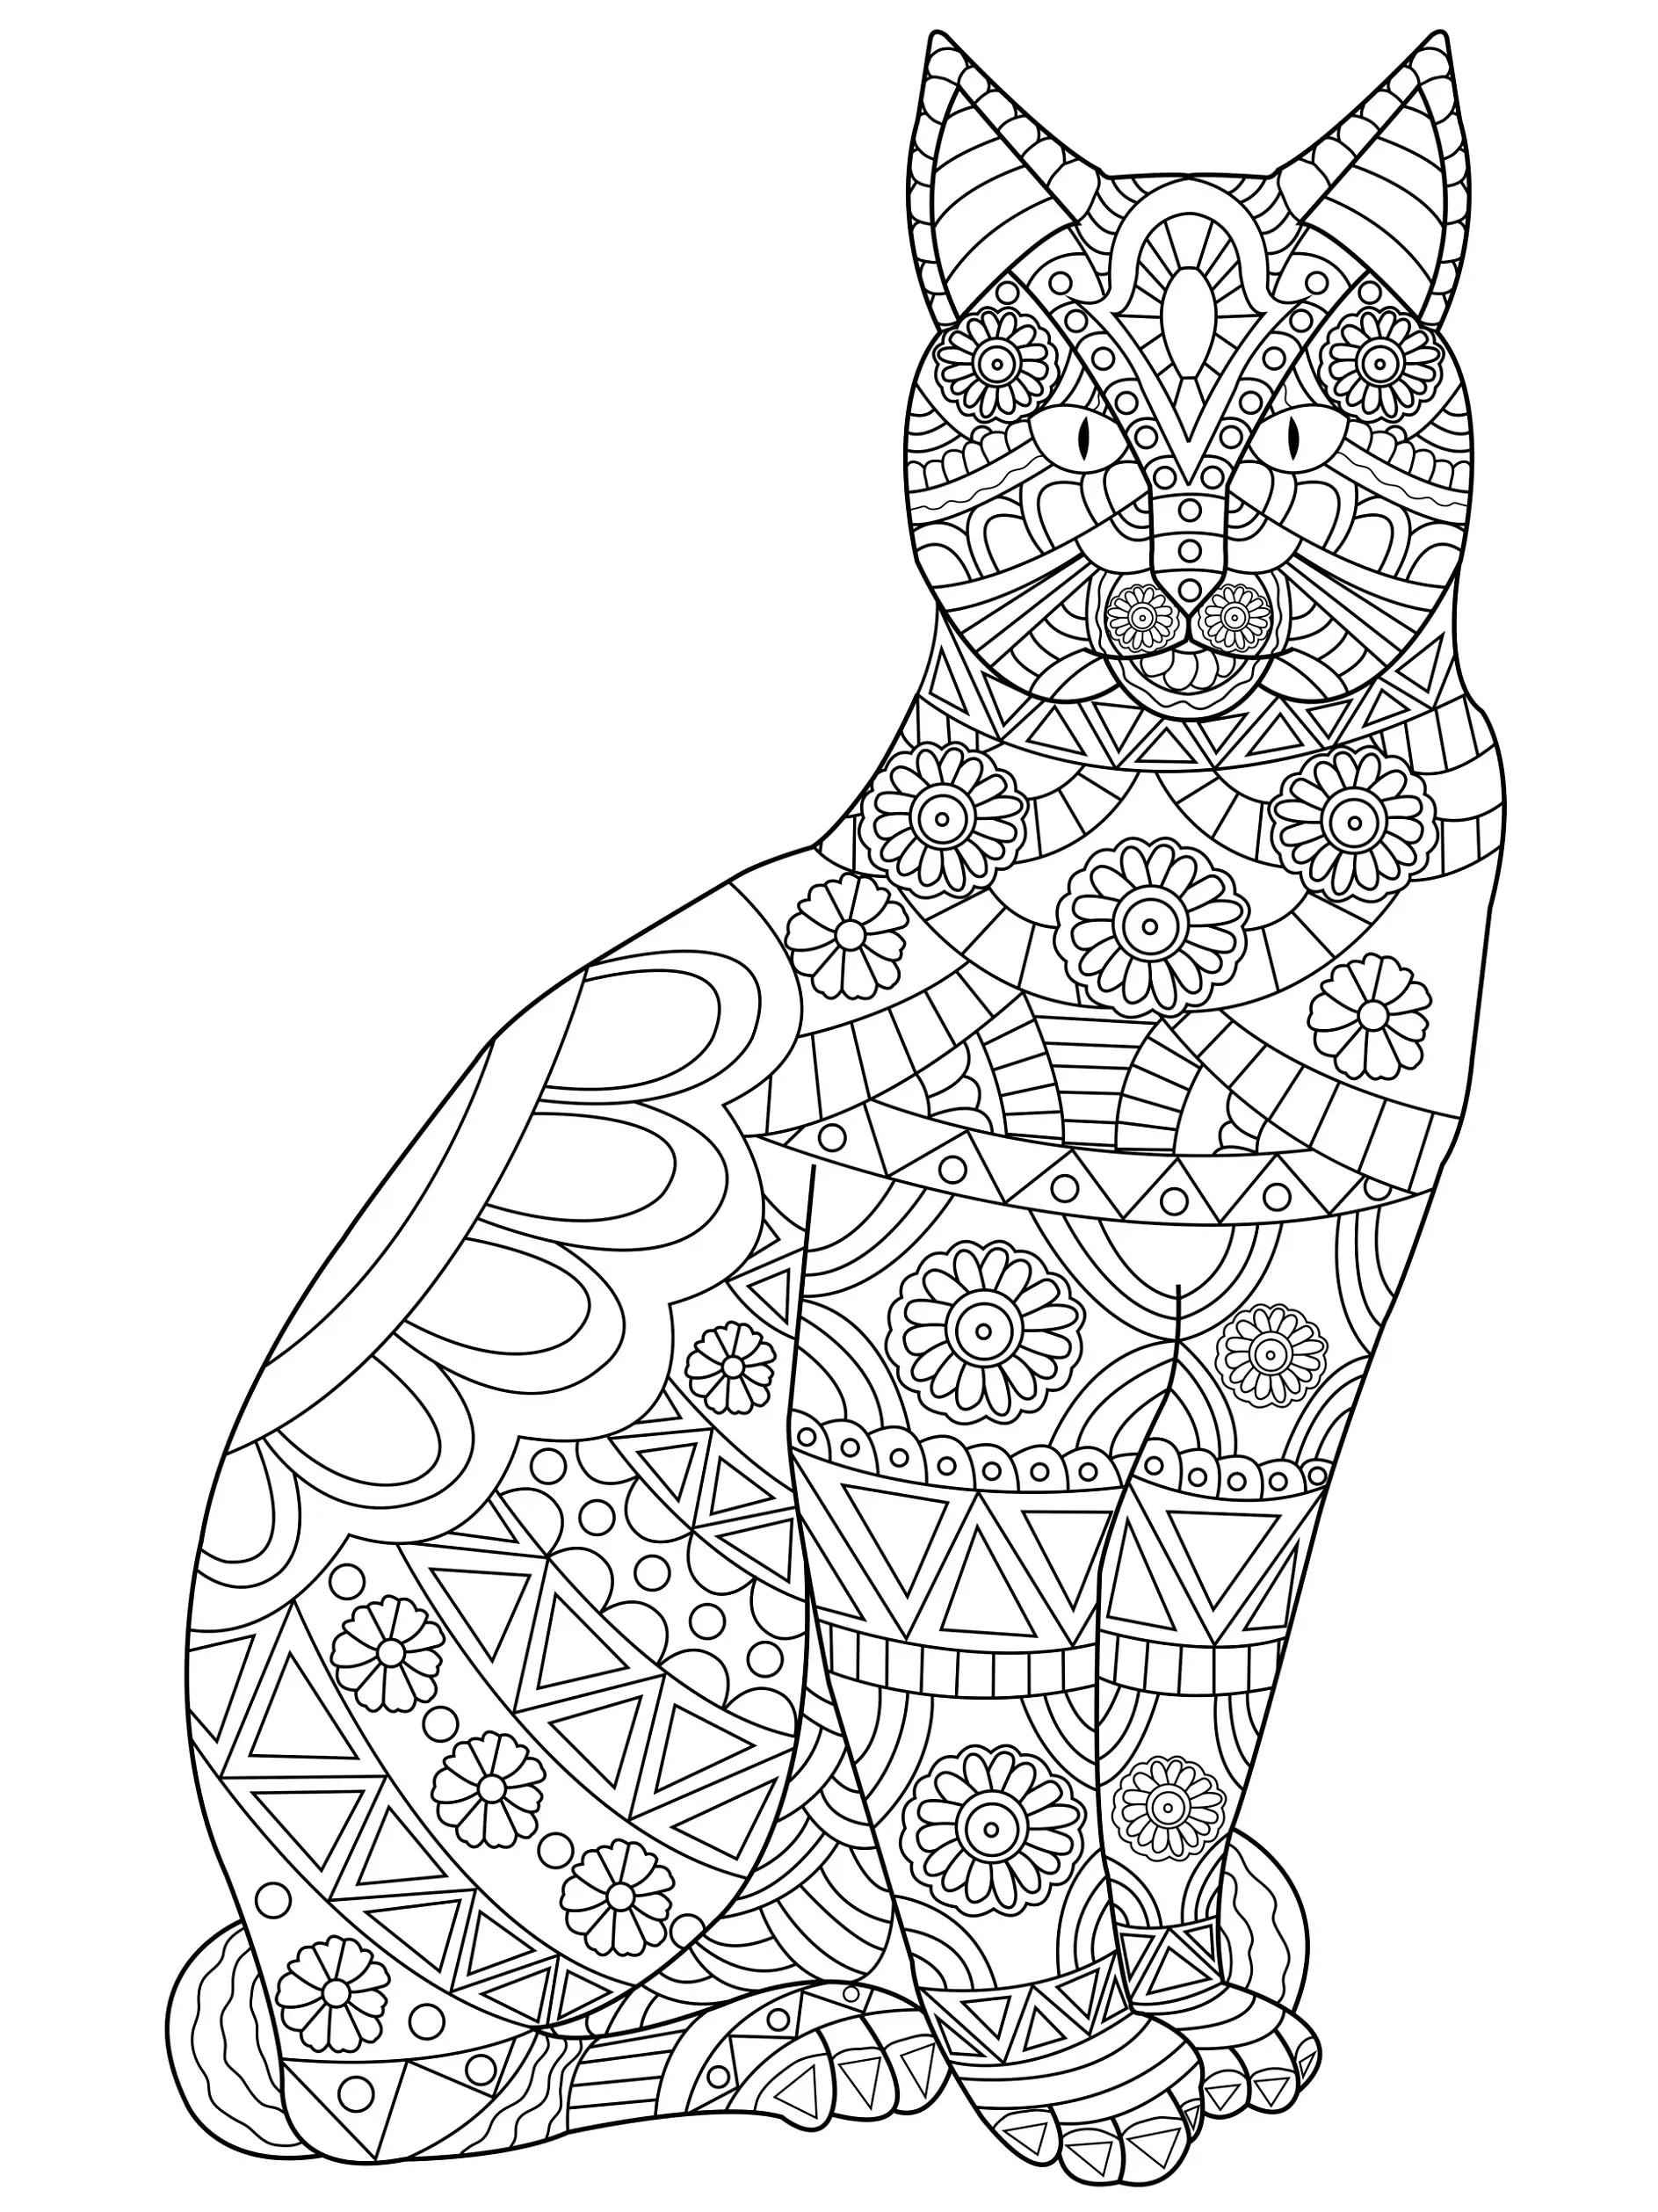 Ausmalbild Mandala mit Katze und komplexen Mustern